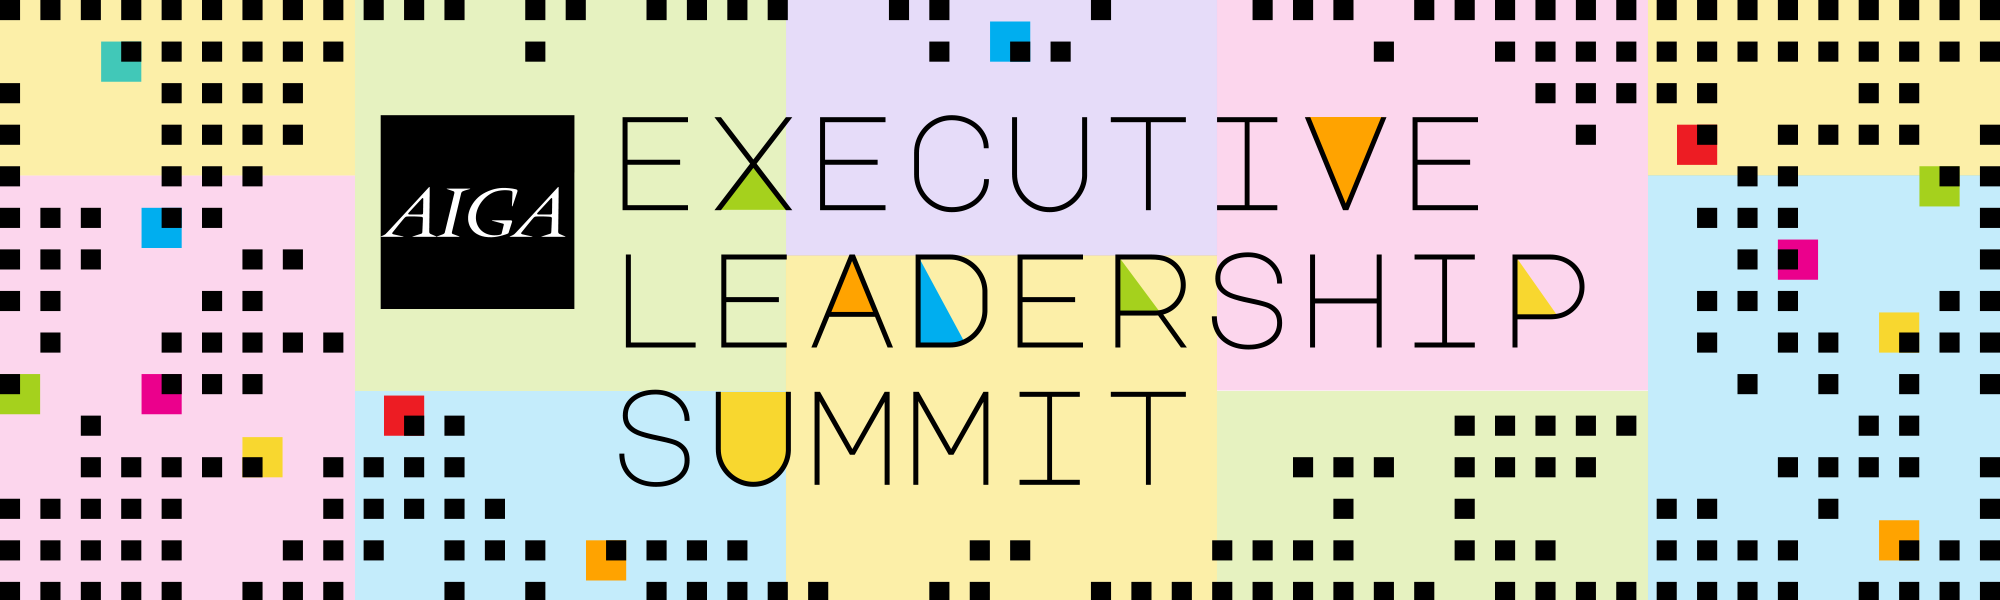 AIGA Executive Leadership Summit 2023